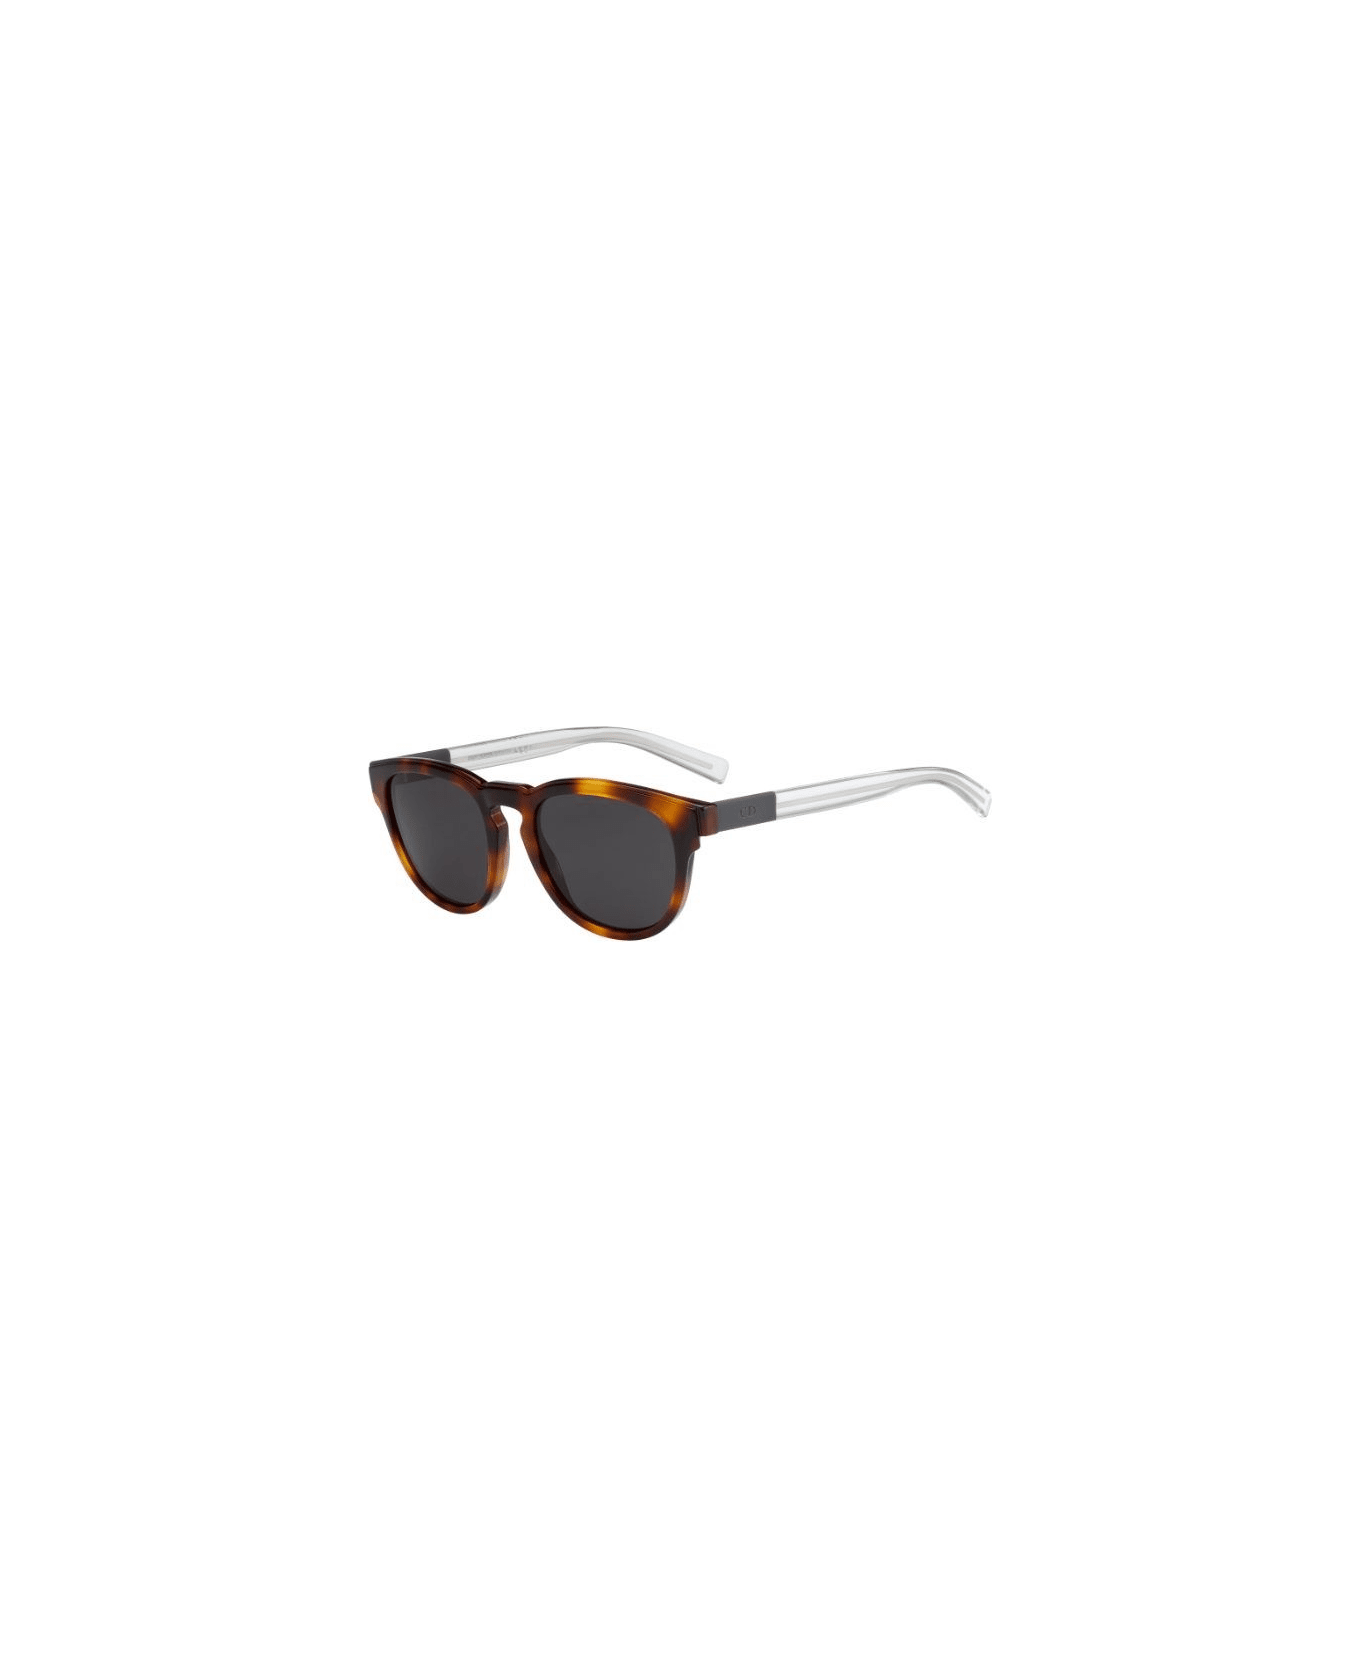 Dior Eyewear Blacktie 212s Sunglasses - Marrone